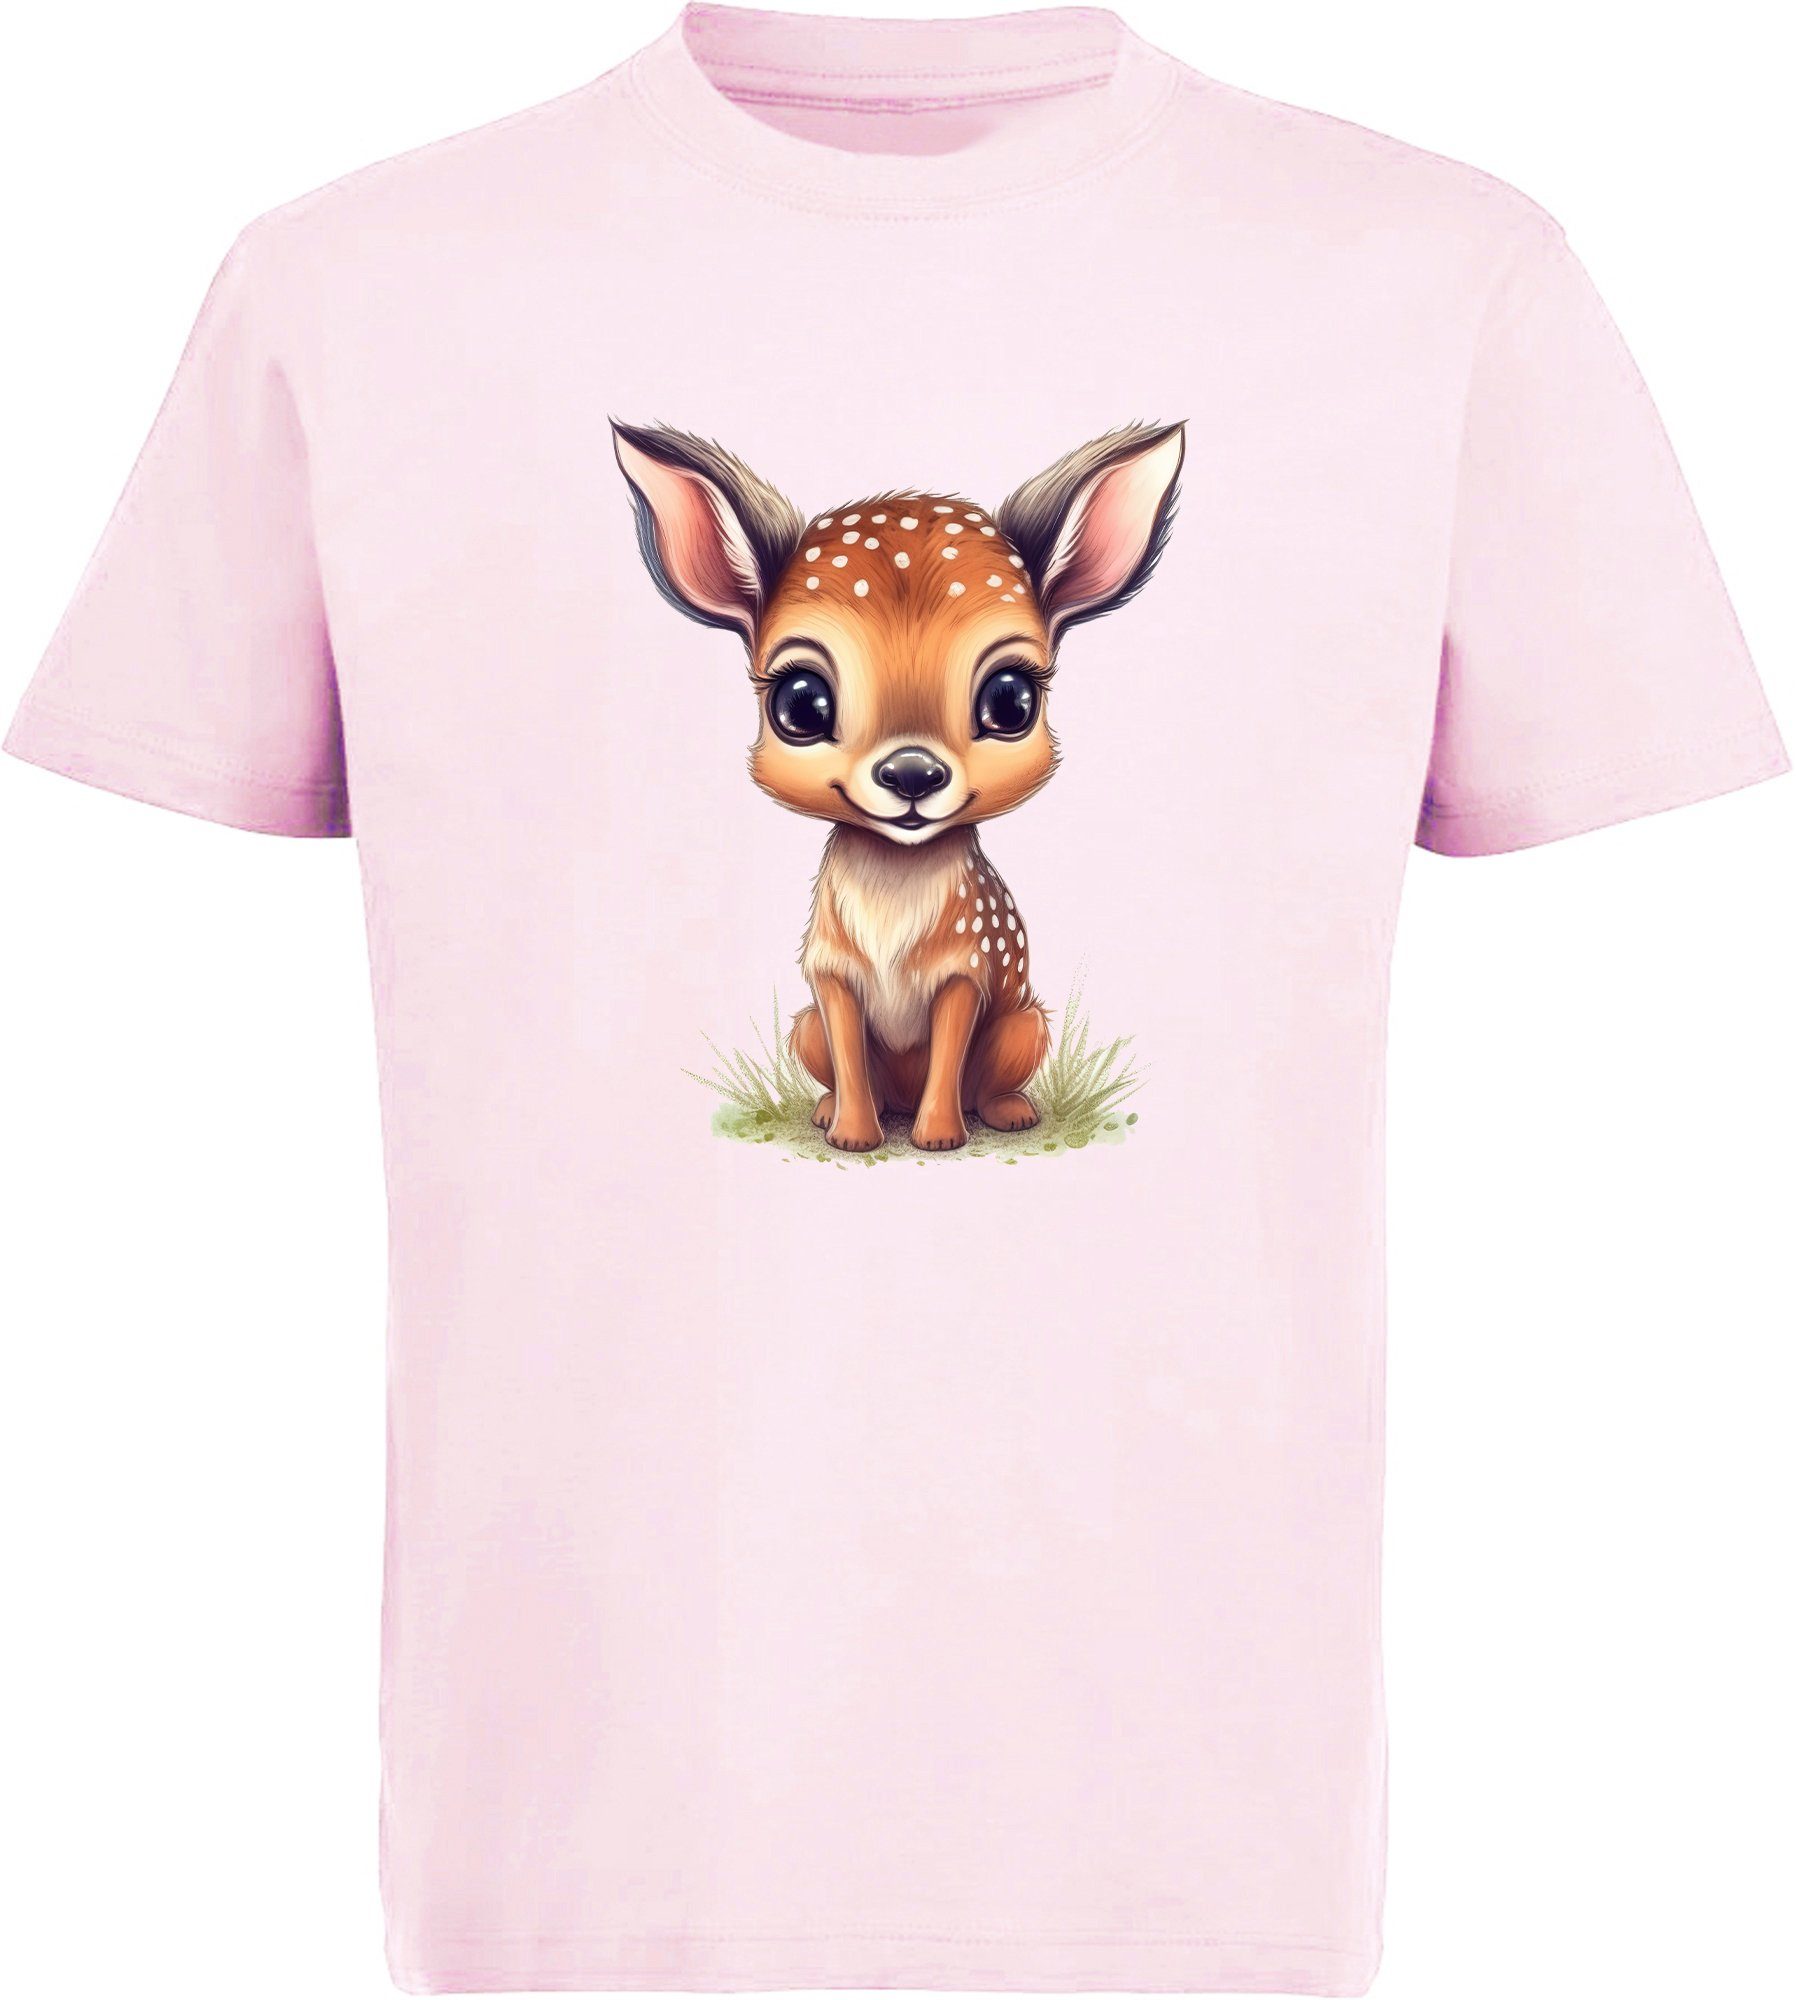 MyDesign24 T-Shirt Kinder Wildtier Print Shirt bedruckt - Baby Reh Rehkitz Baumwollshirt mit Aufdruck, i269 rosa